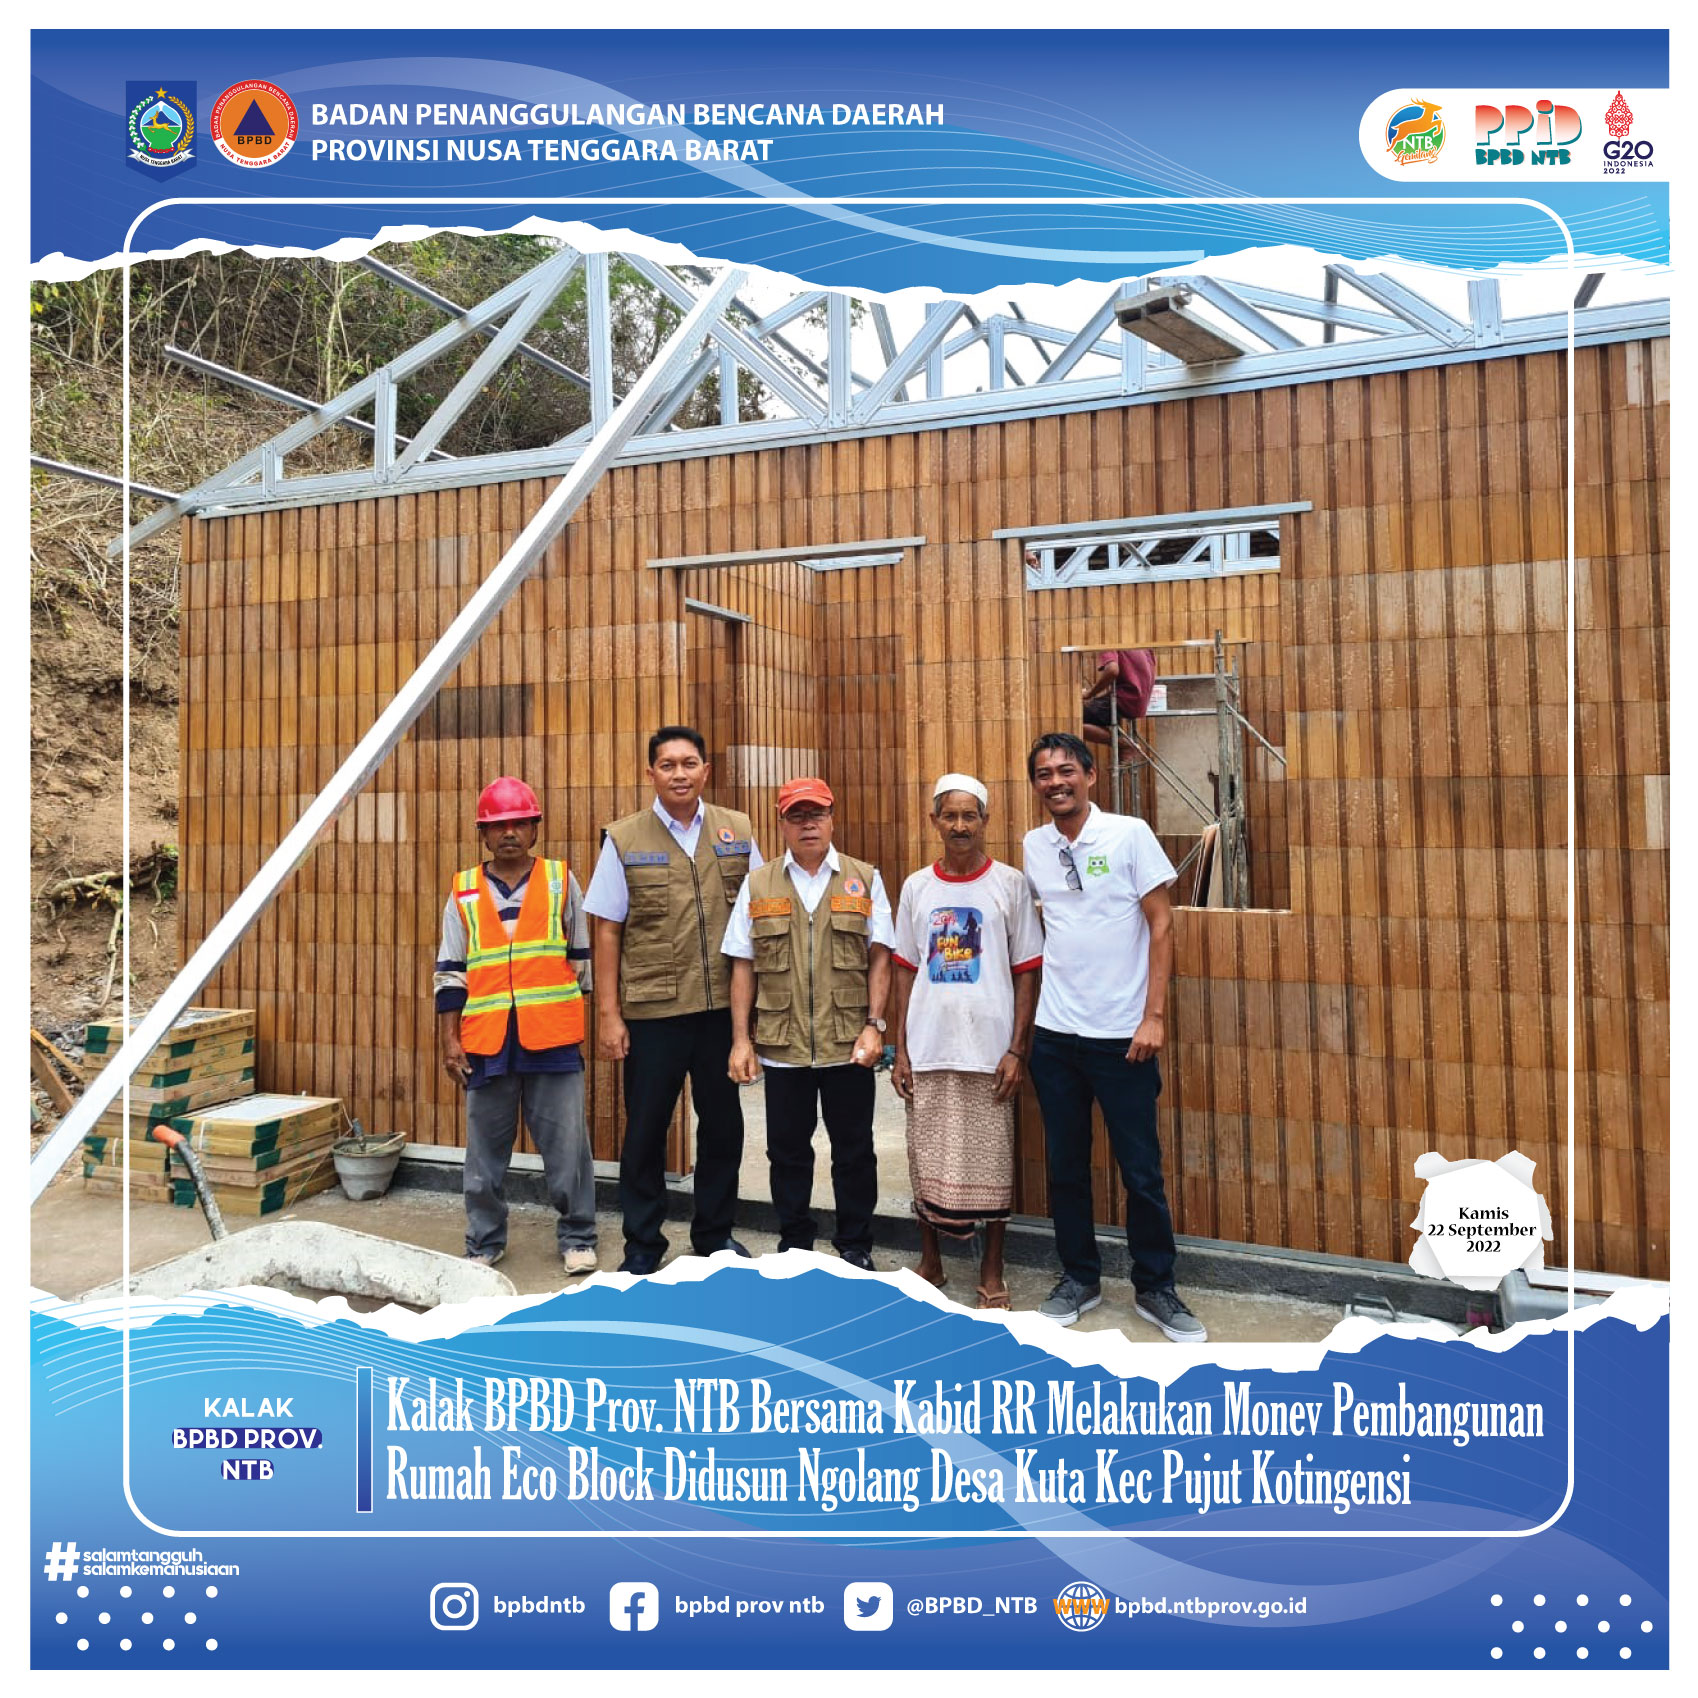 Kalak BPBD Prov. NTB Bersama Kabid RR Melakukan Monev Pembangunan Rumah Eco Block Didusun Ngolang Desa Kuta Kec Pujut (Kamis, 22 September 2022)